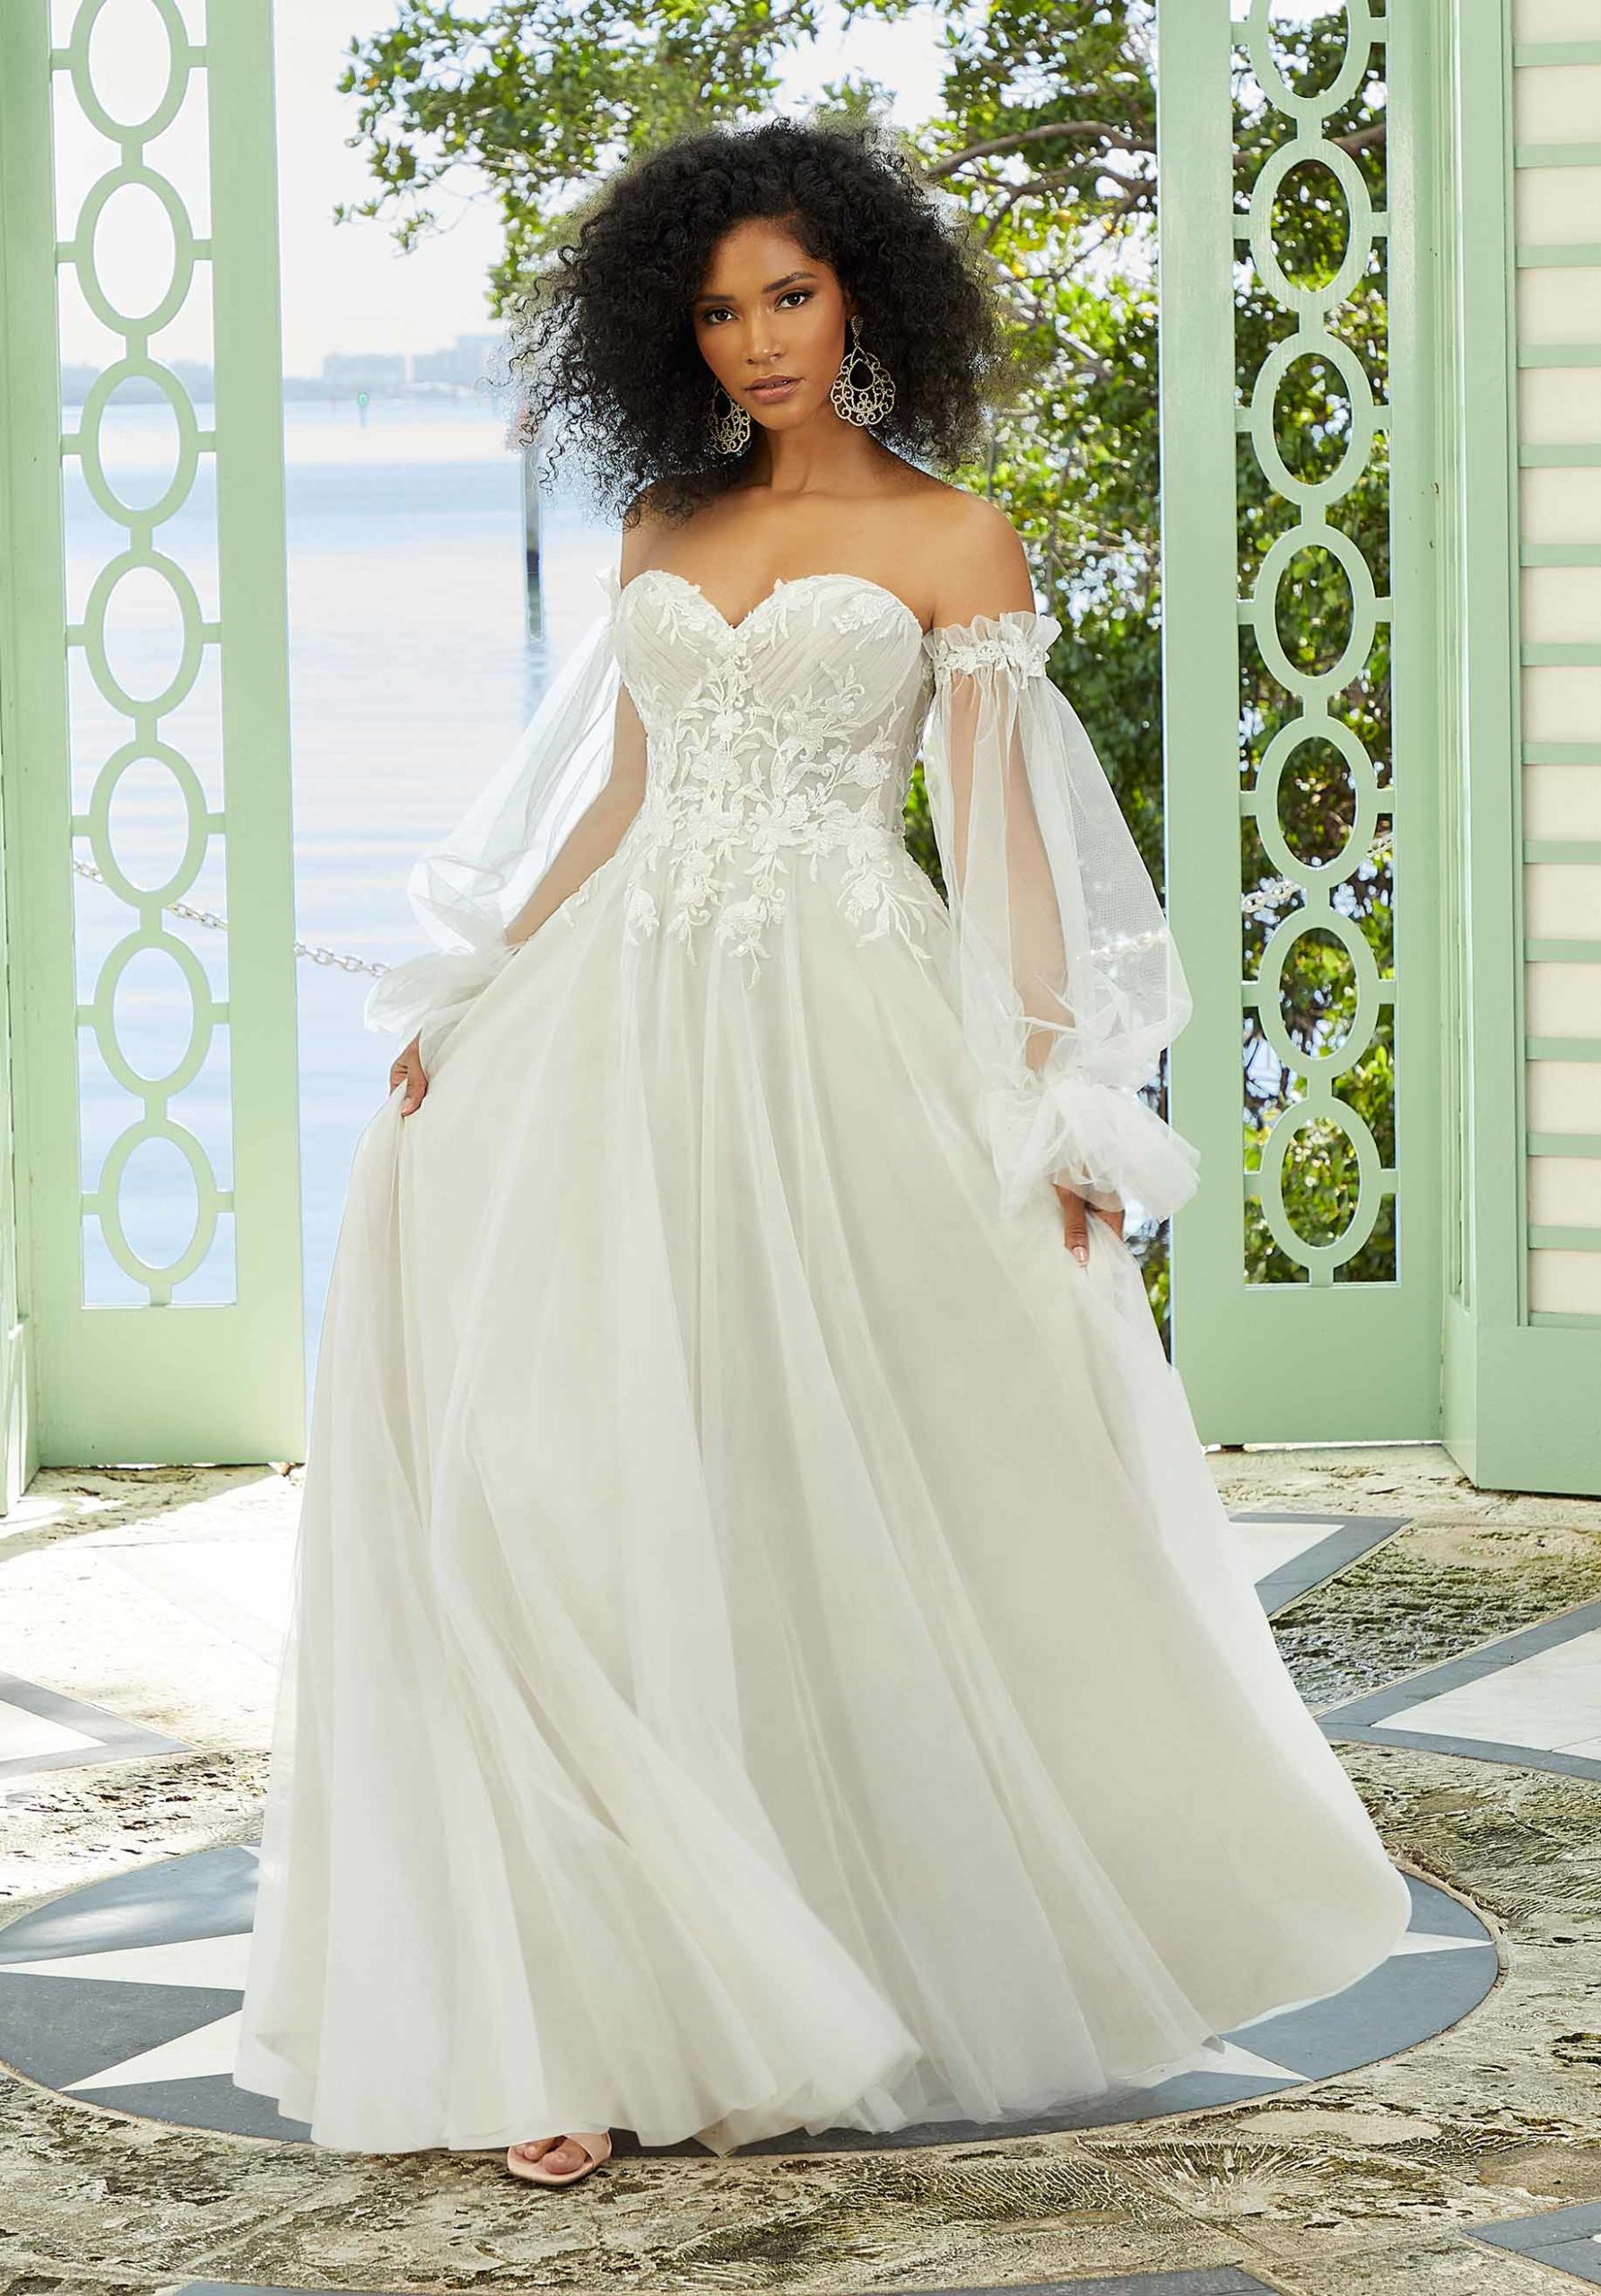 Wedding Dress 360: A Brides x Pinterest Video Series